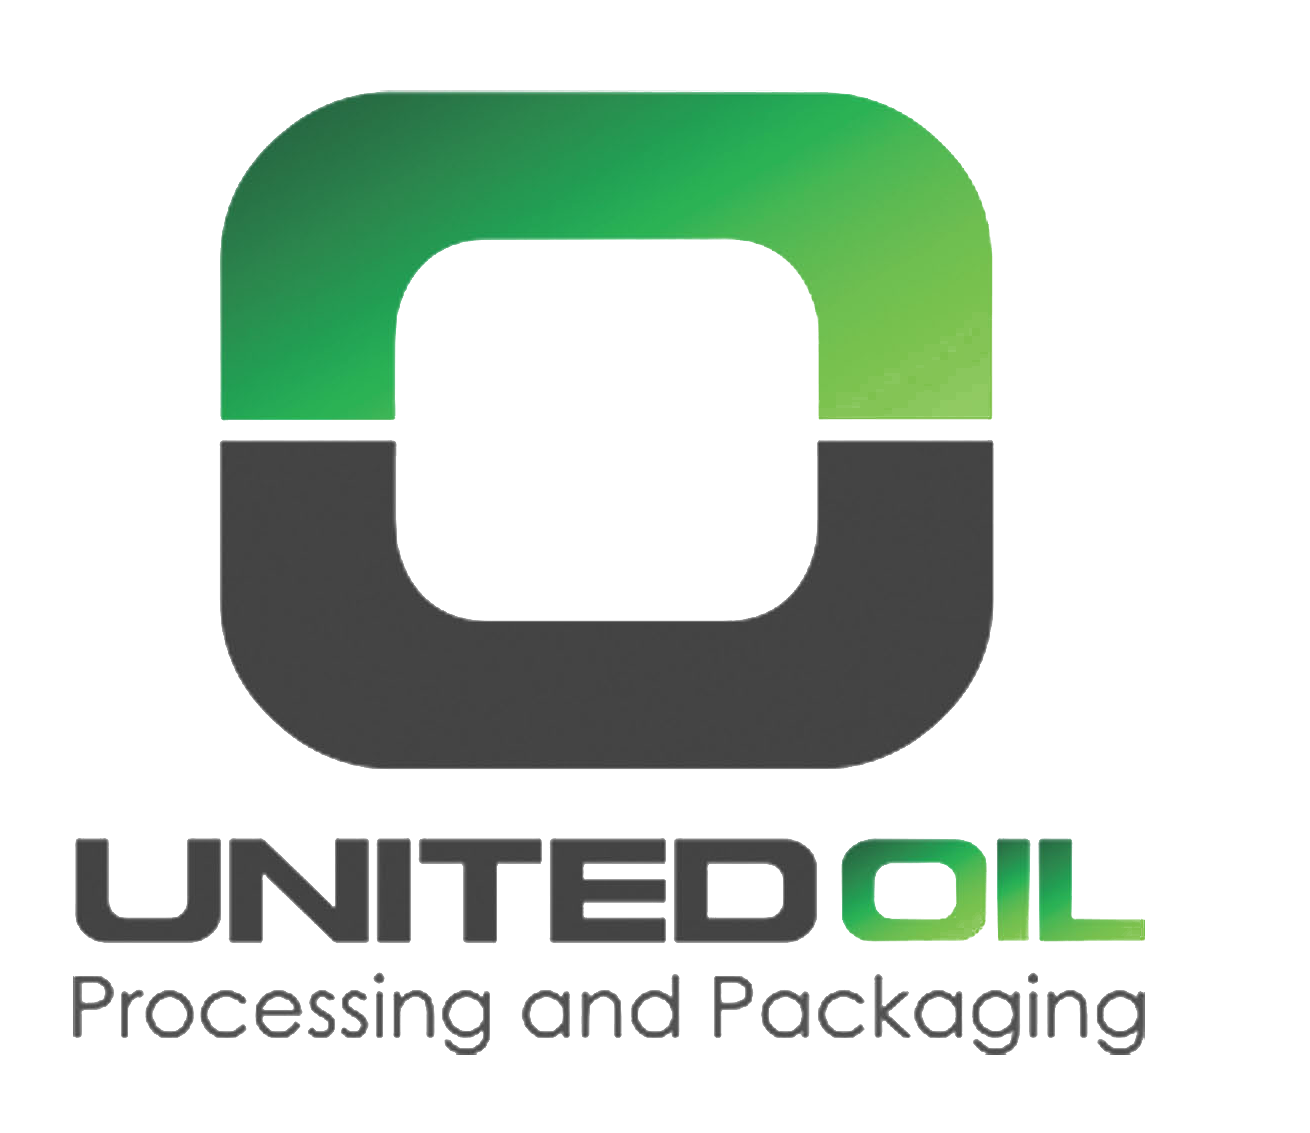 United-oil